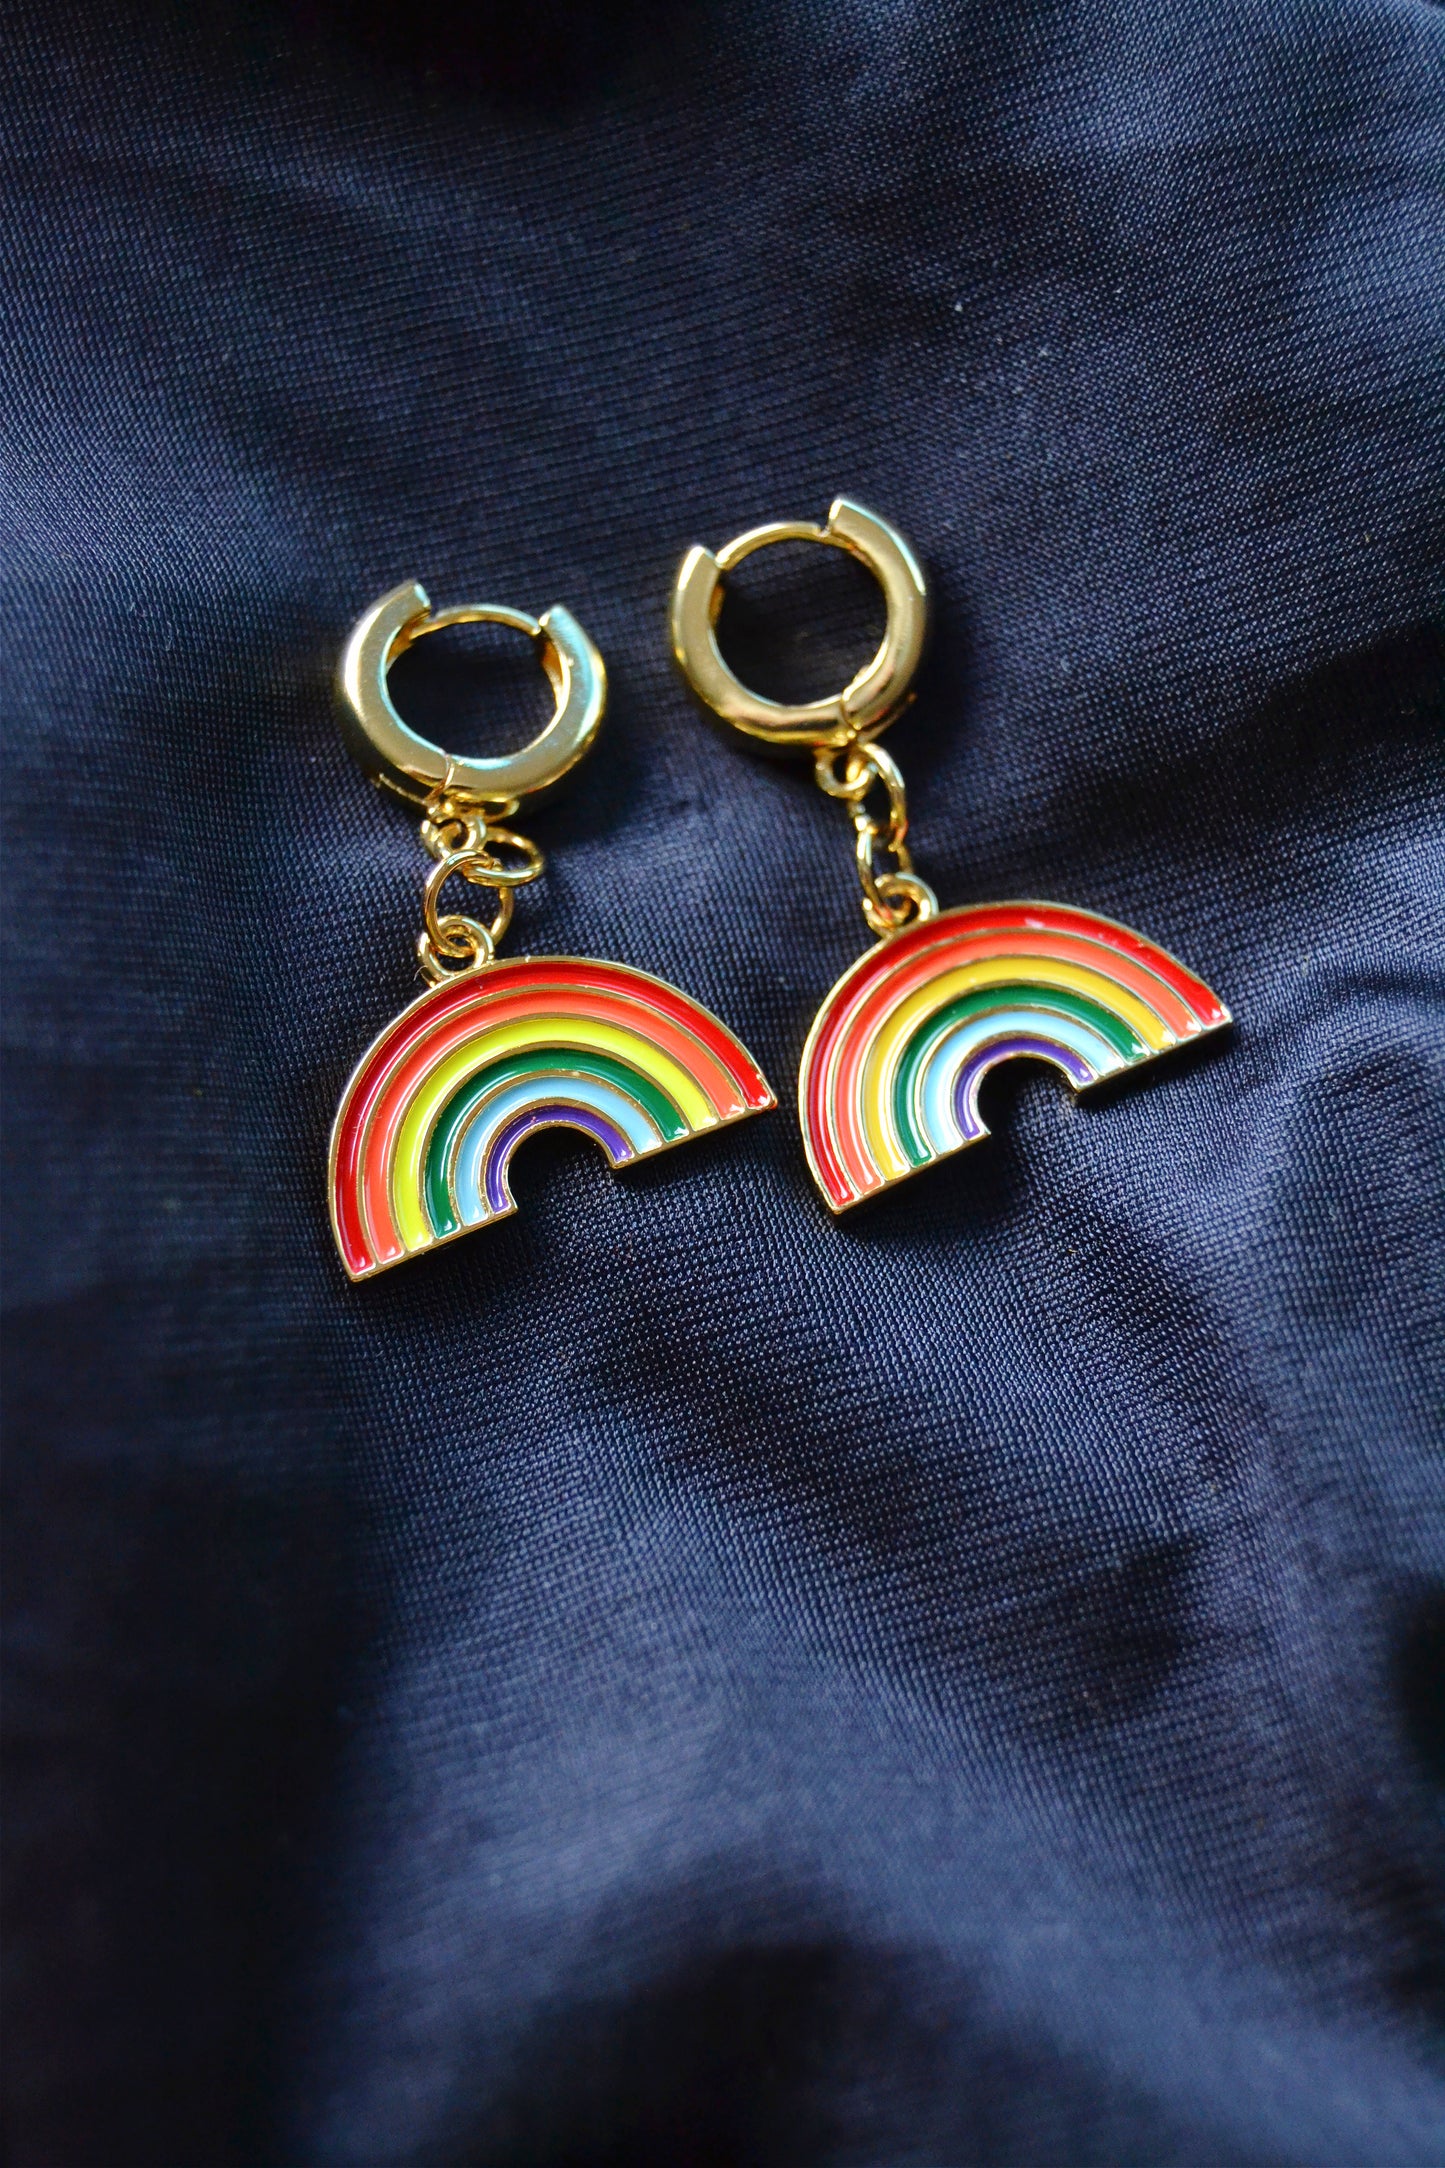 The Over the Rainbow Earrings